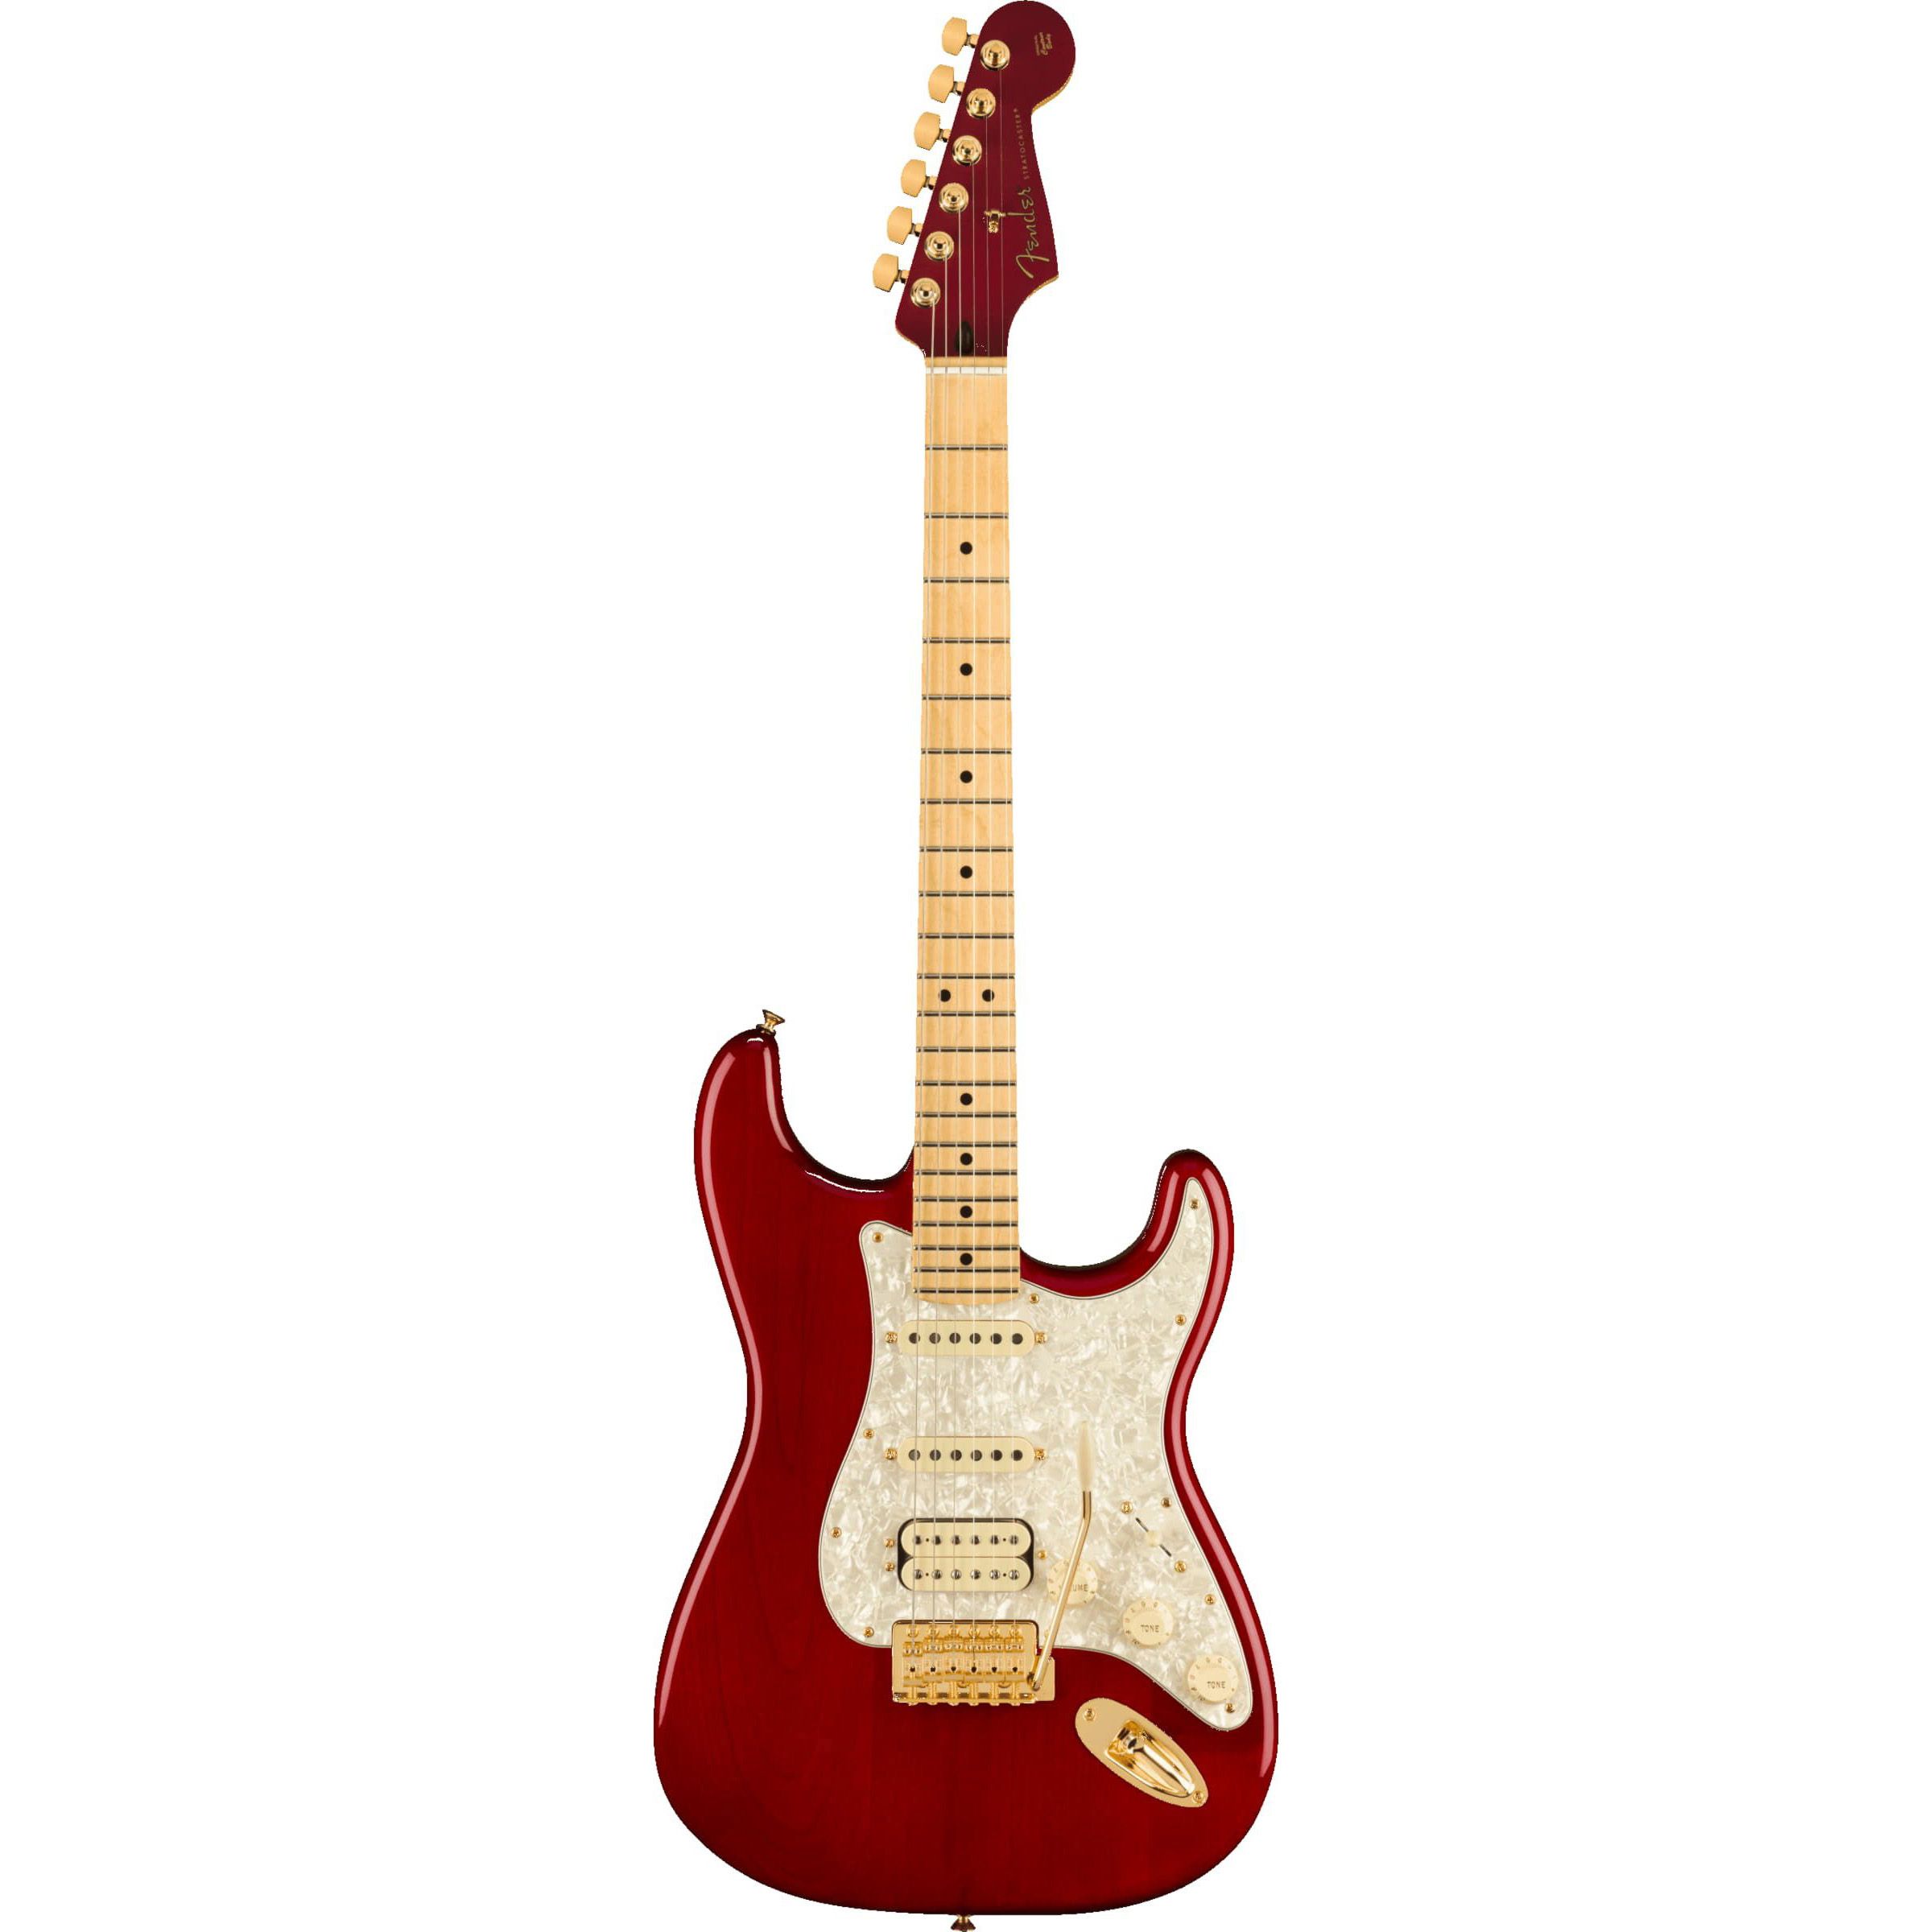 Stratocaster цена. Электрогитара Magna be 1309m. Электрогитара Magna be 3211m. Гитара Fender Stratocaster. Фендер стратокастер красный.